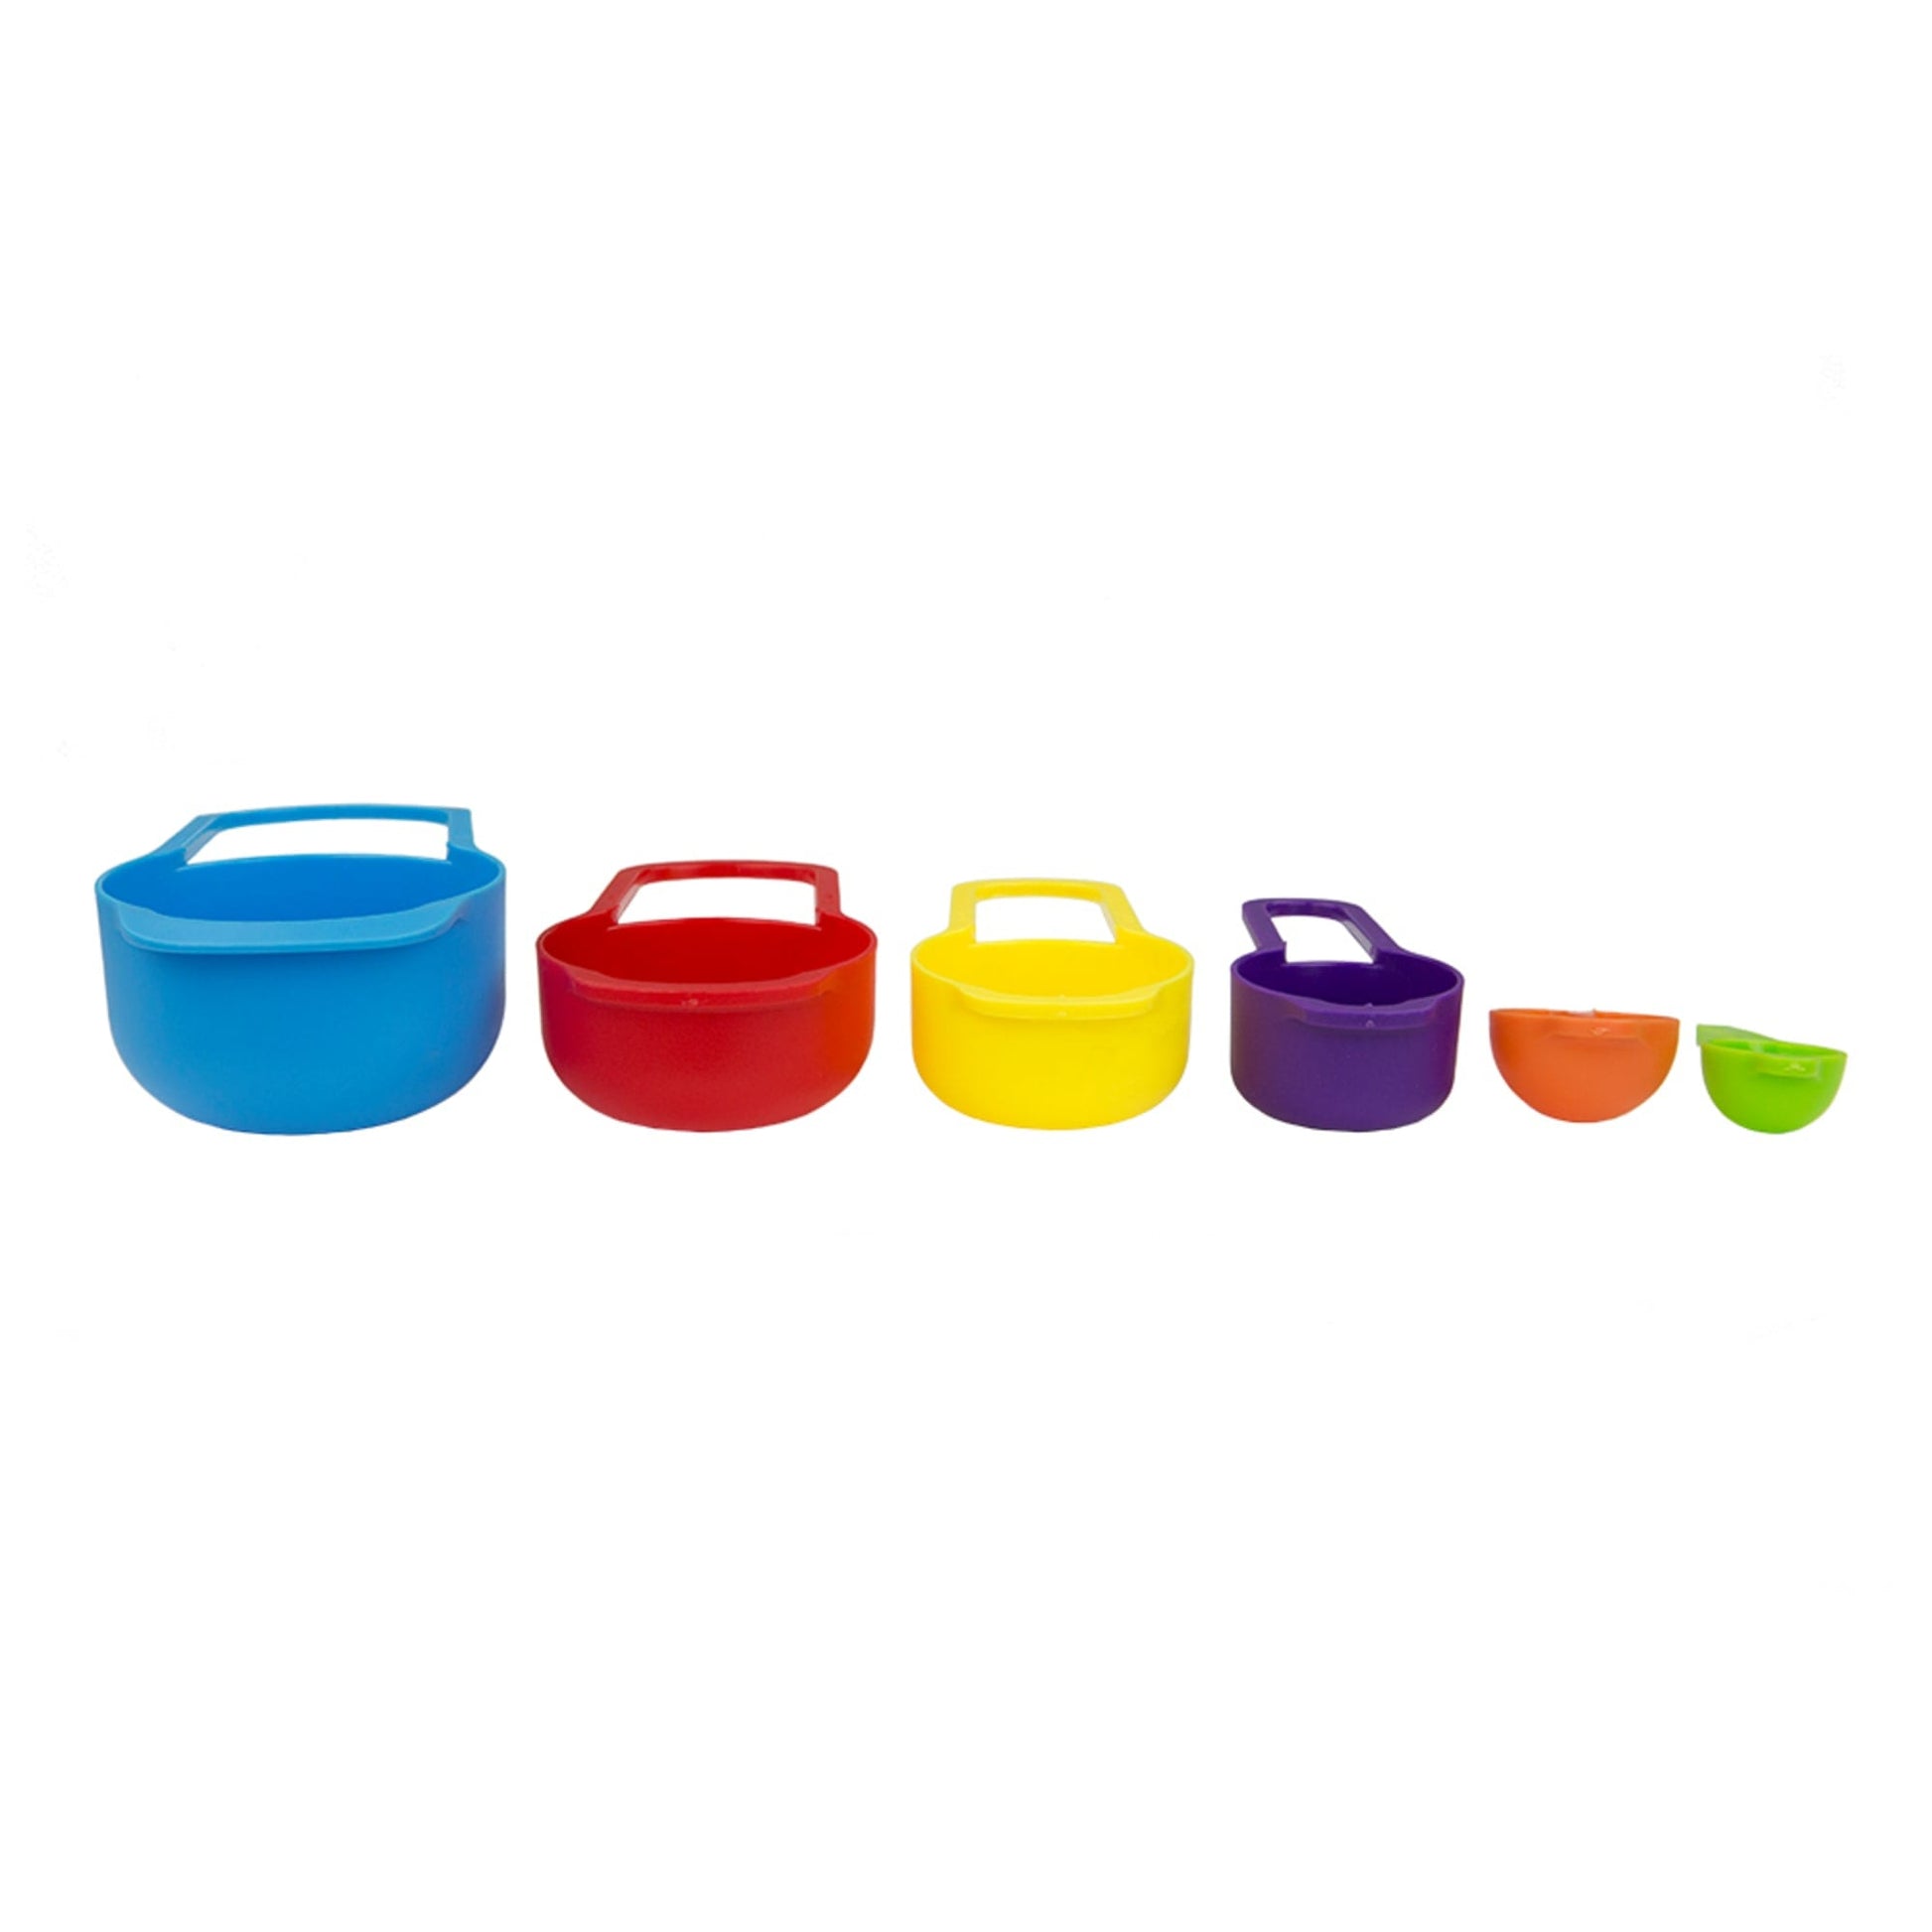 Home Basics 6 Piece Plastic Measuring Cup Set, Multi-Colored, FOOD PREP